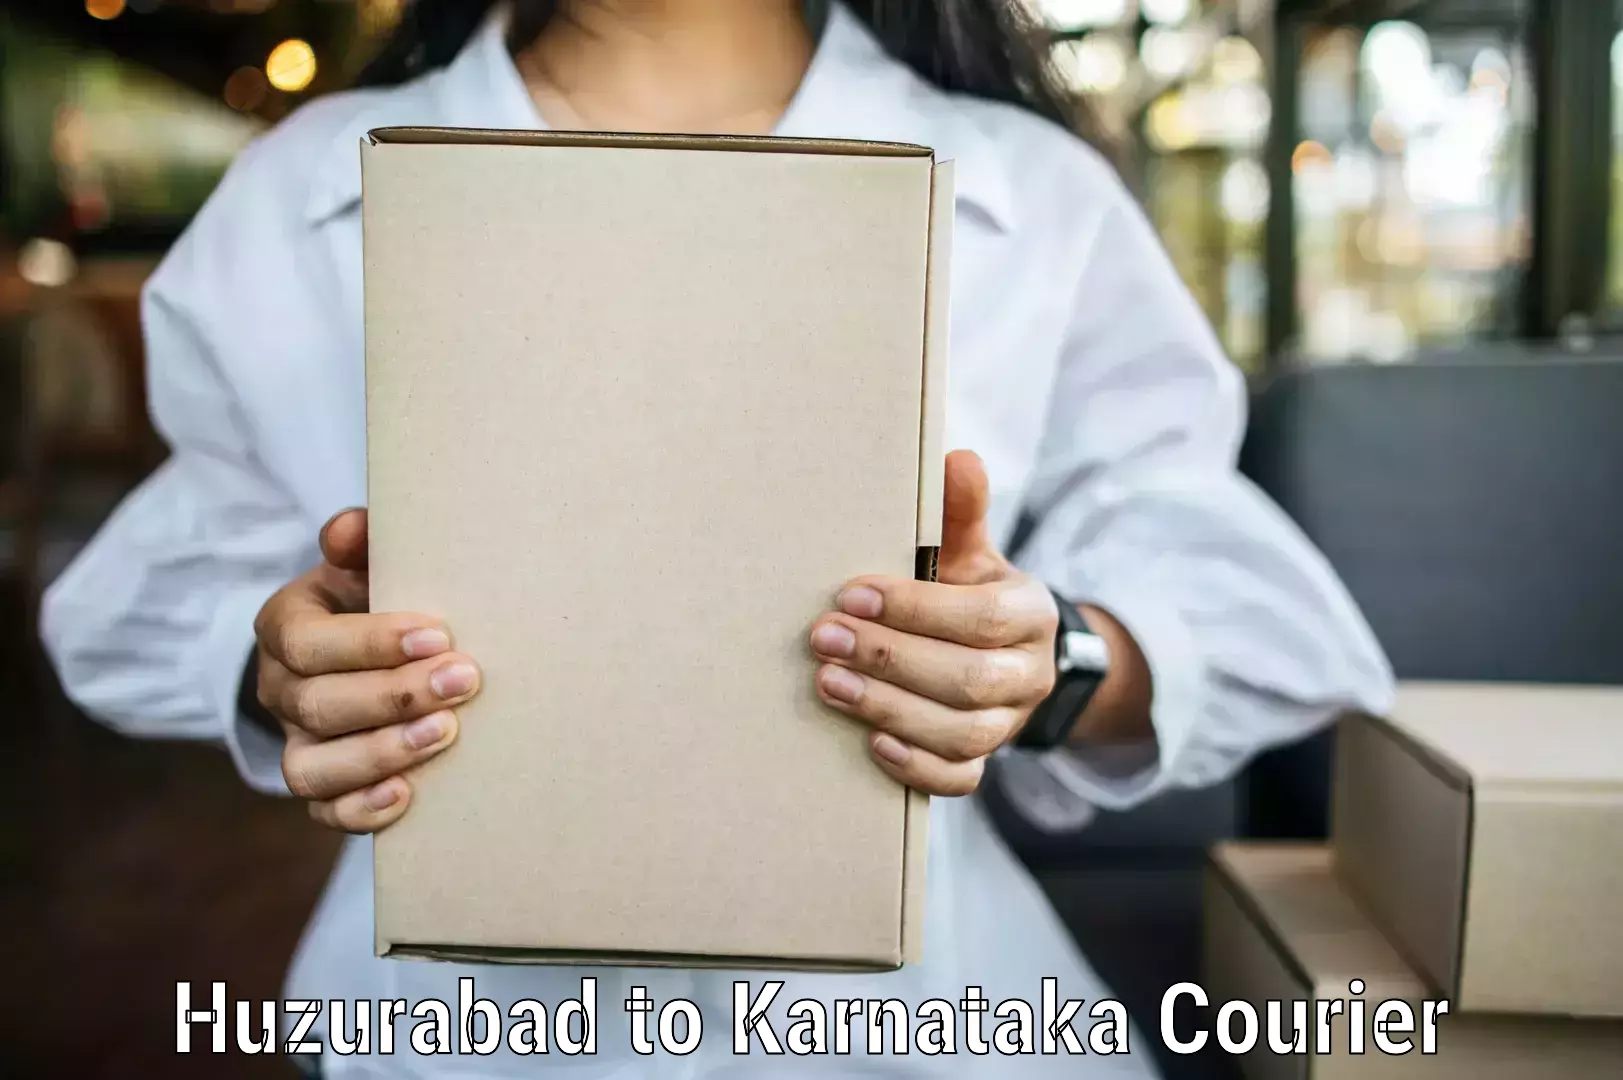 State-of-the-art courier technology Huzurabad to Kanjarakatte